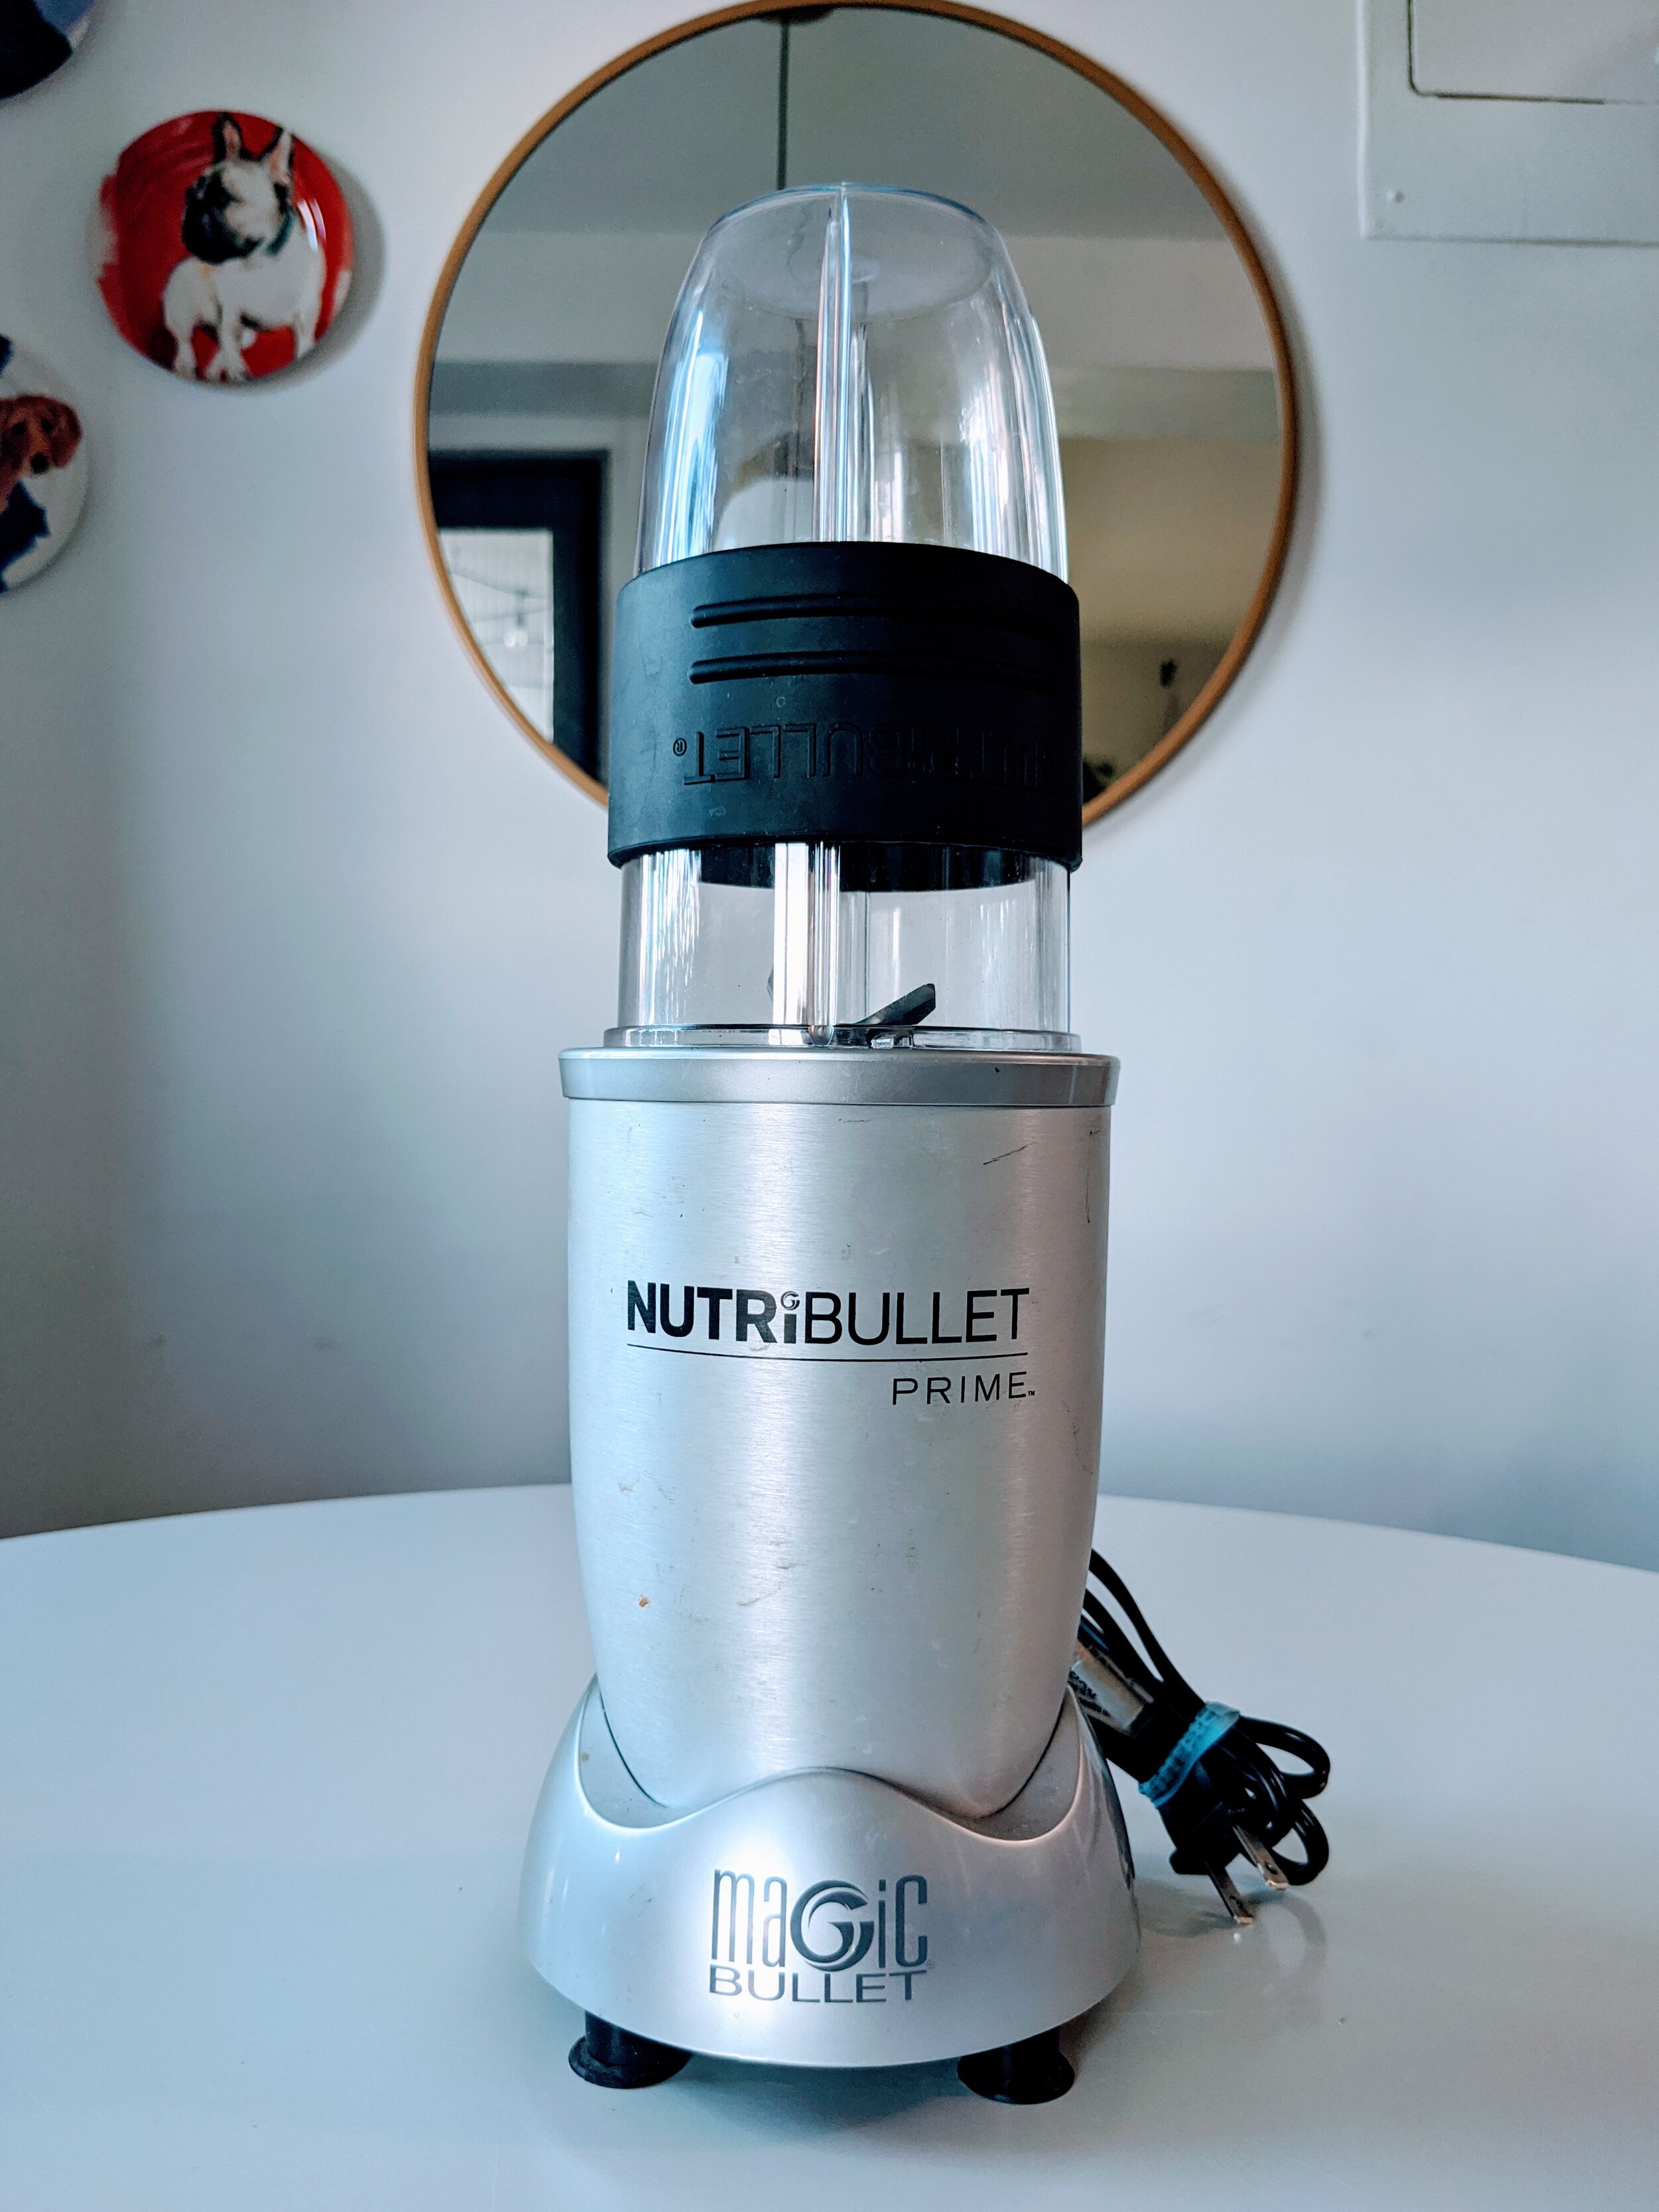 nutribullet Immersion Blender with Whisk Attachment - Dutch Goat